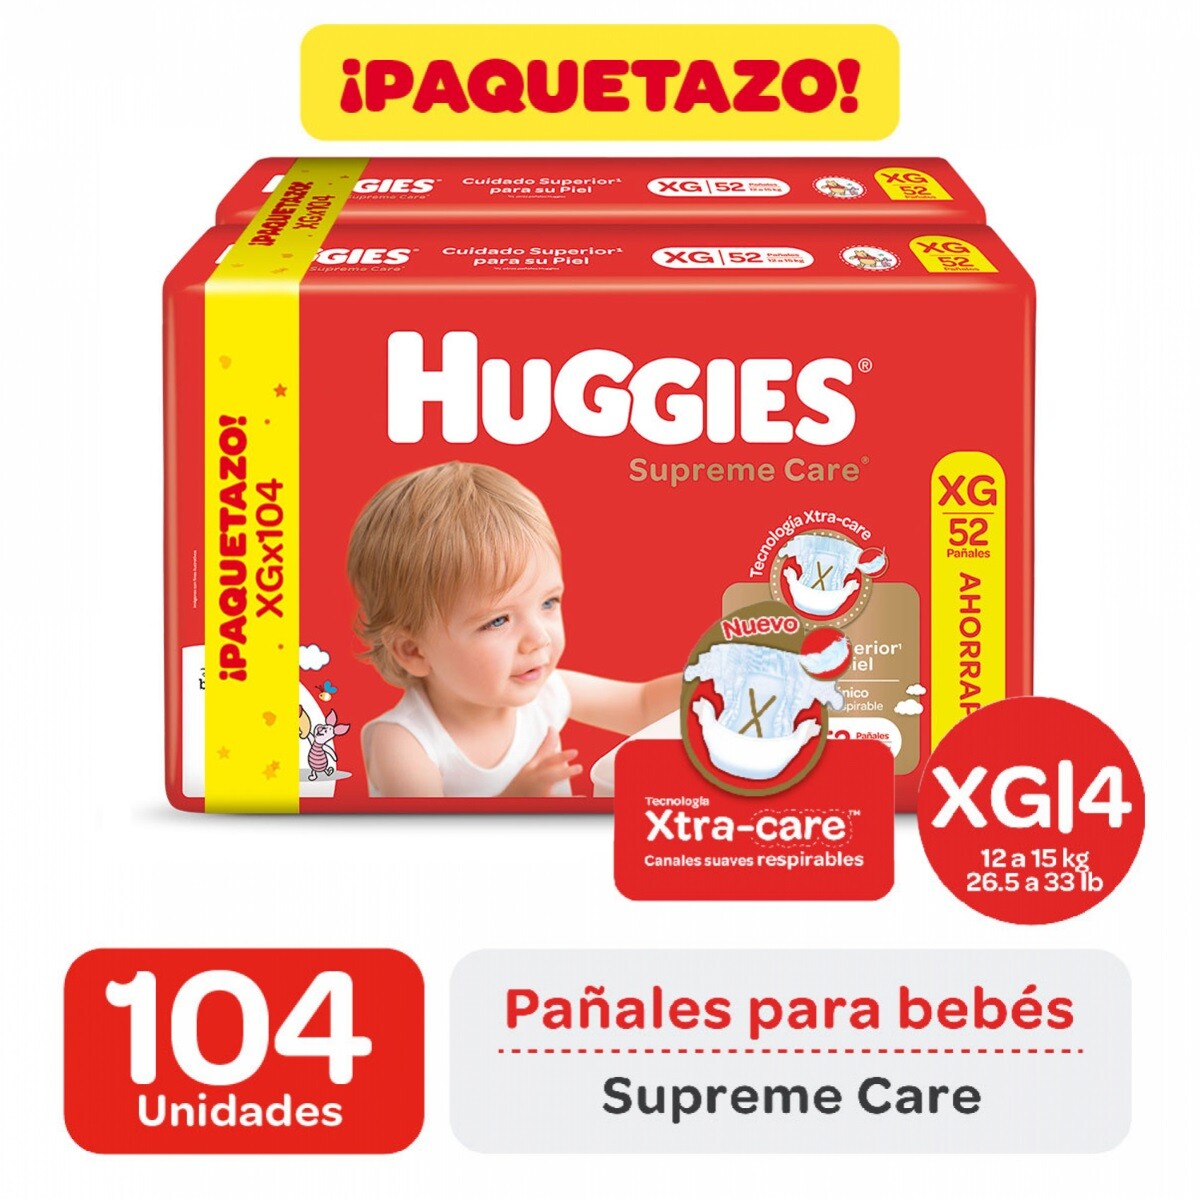 Pañales Huggies Supreme Care Talle Xg 104 Uds. 